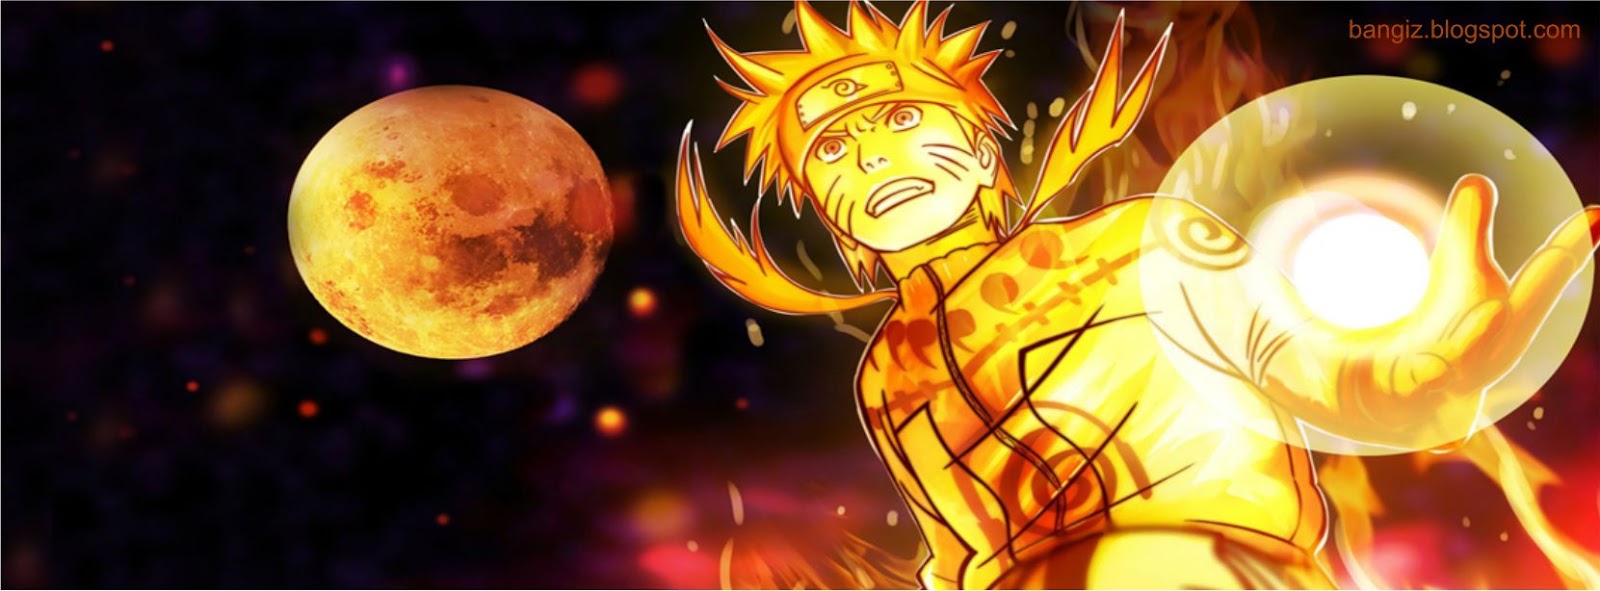 Gambar 100 Gambar Dp Bbm Animasi Naruto Bergerak Terbaru 